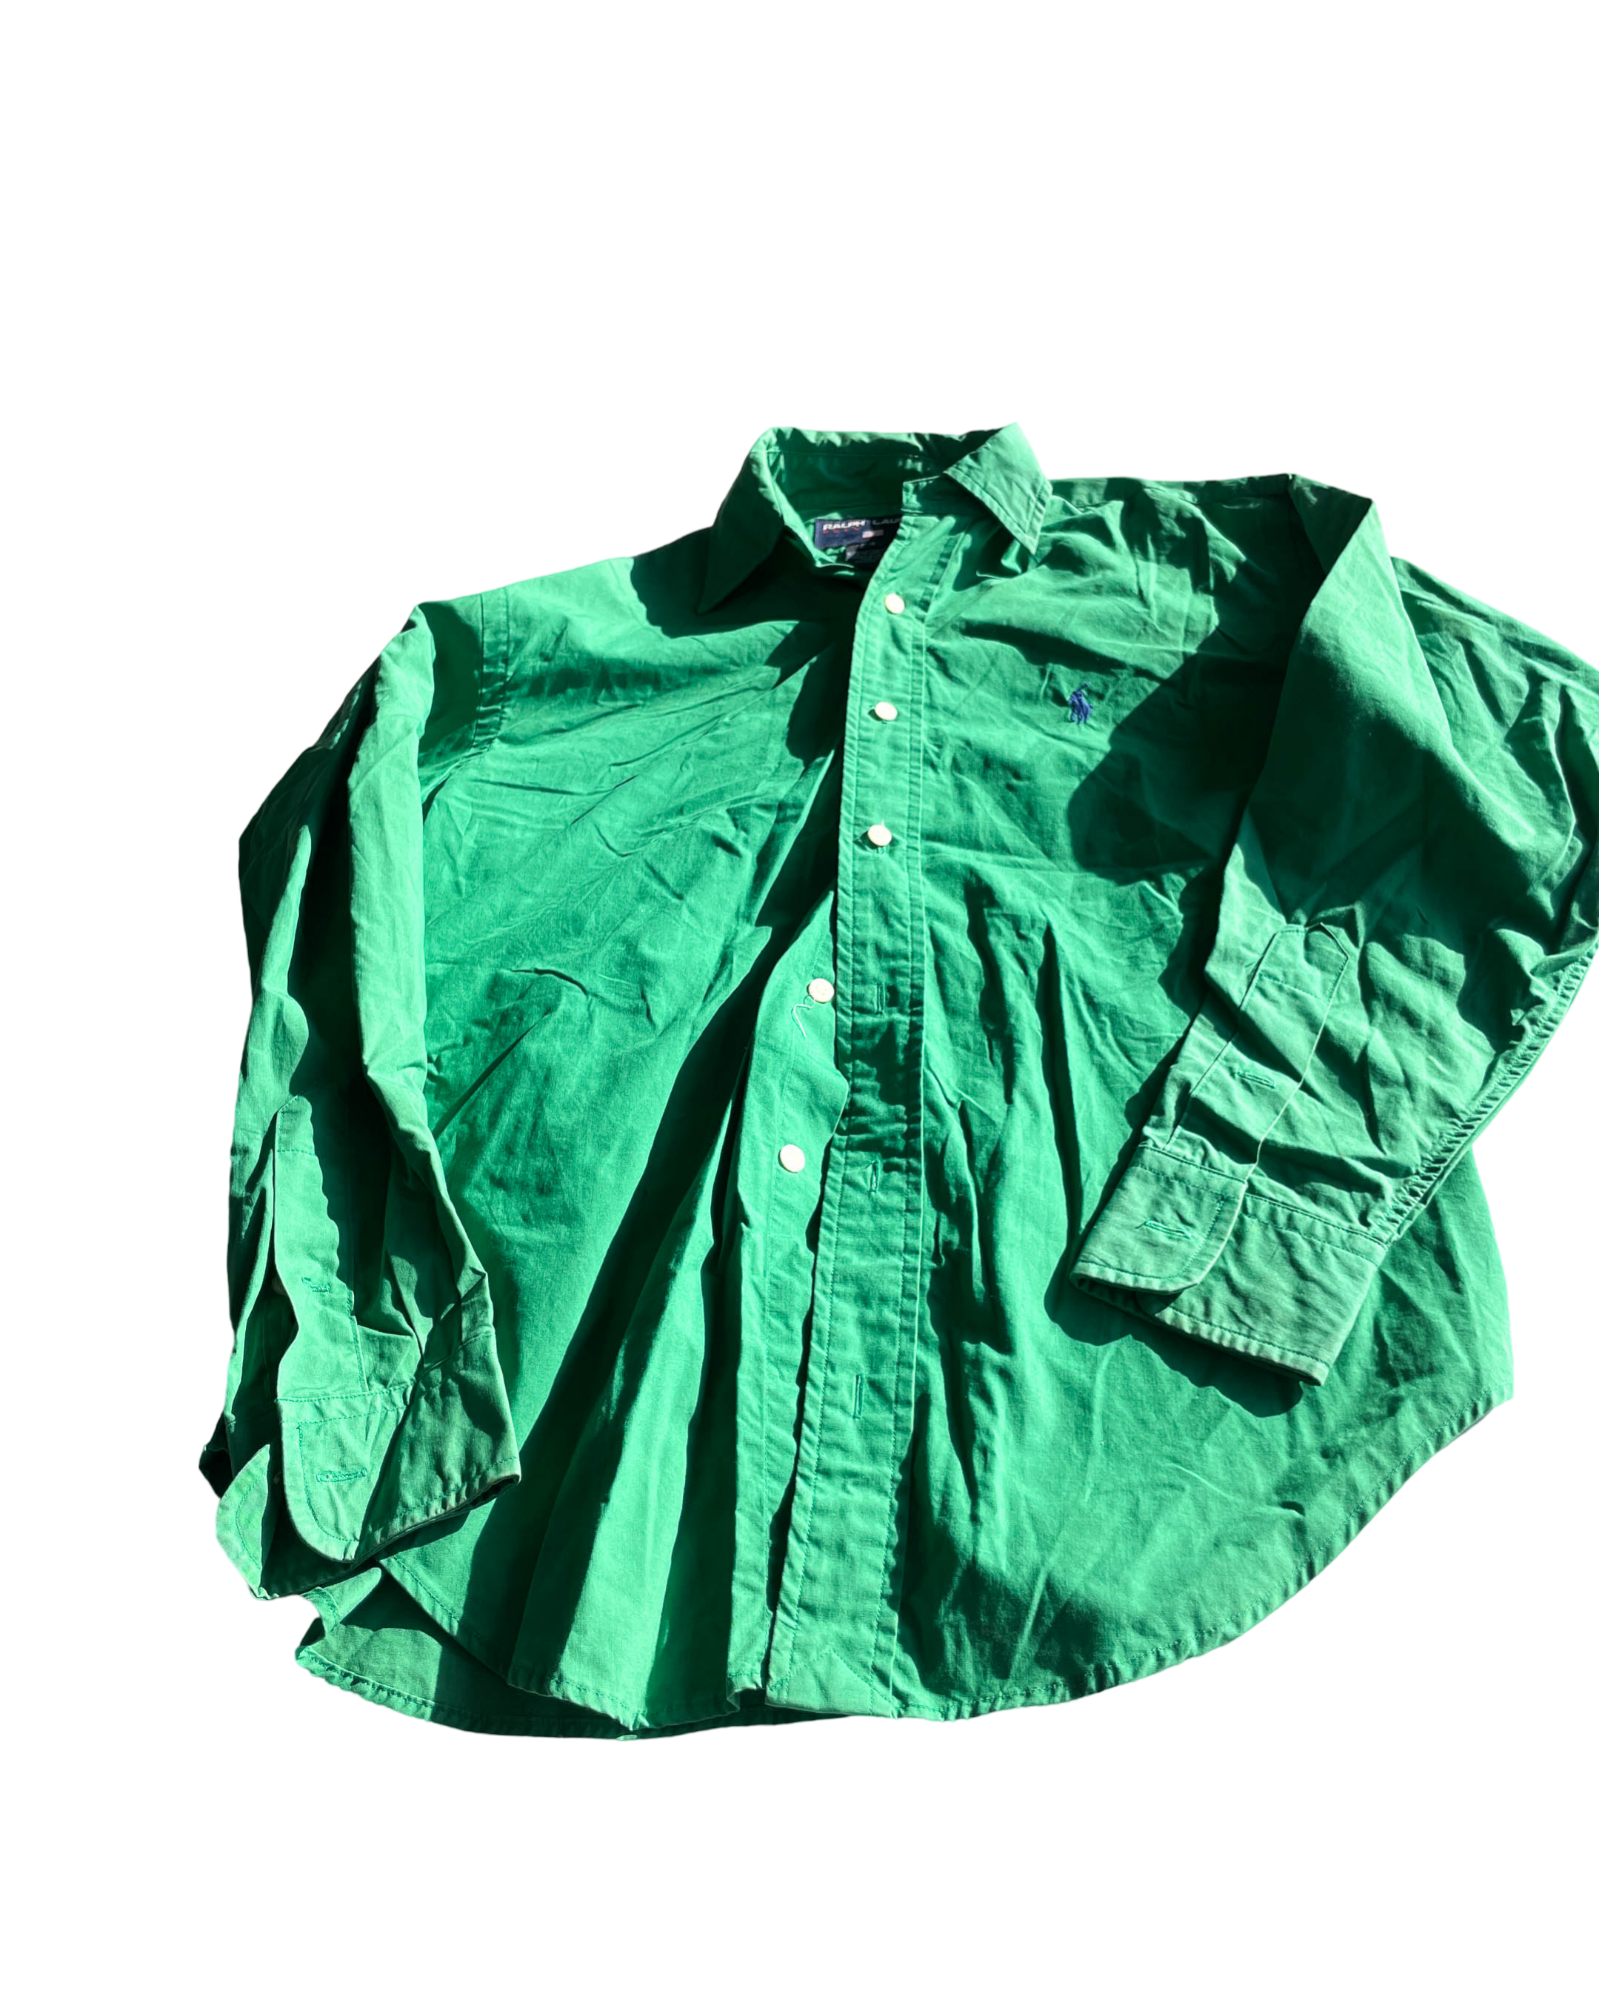 Vintage Ralph Lauren Button-Down Shirt. In size women's M/L|SKU 5051